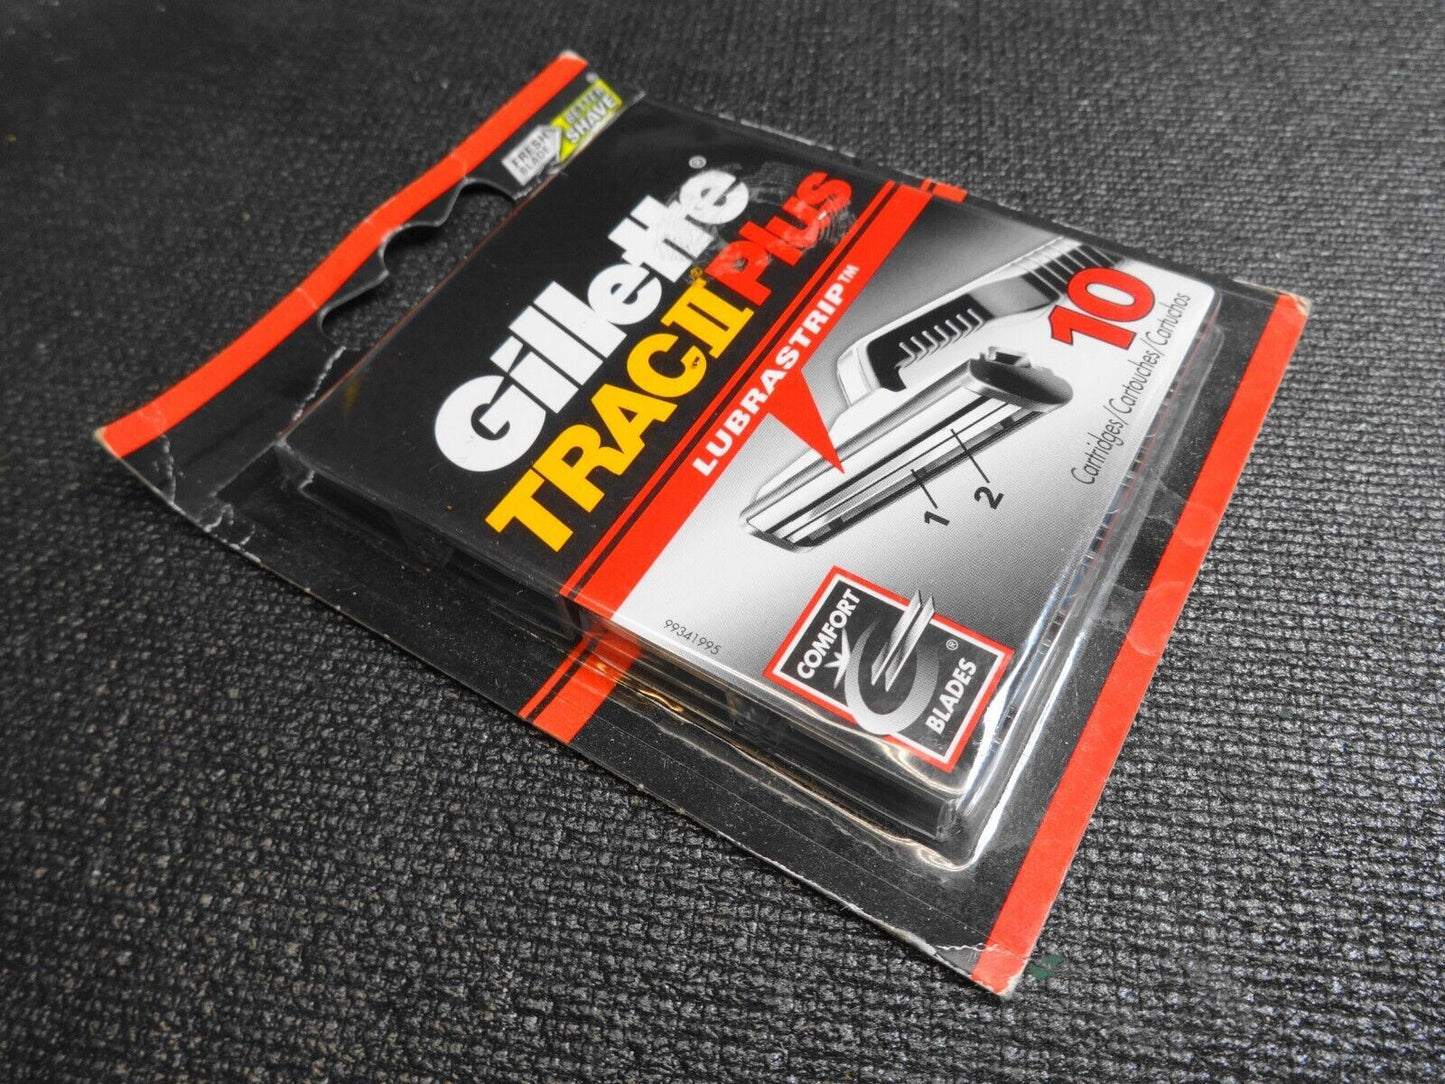 Gillette Trac II Plus Refill Razor Cartridges - Pack of 10